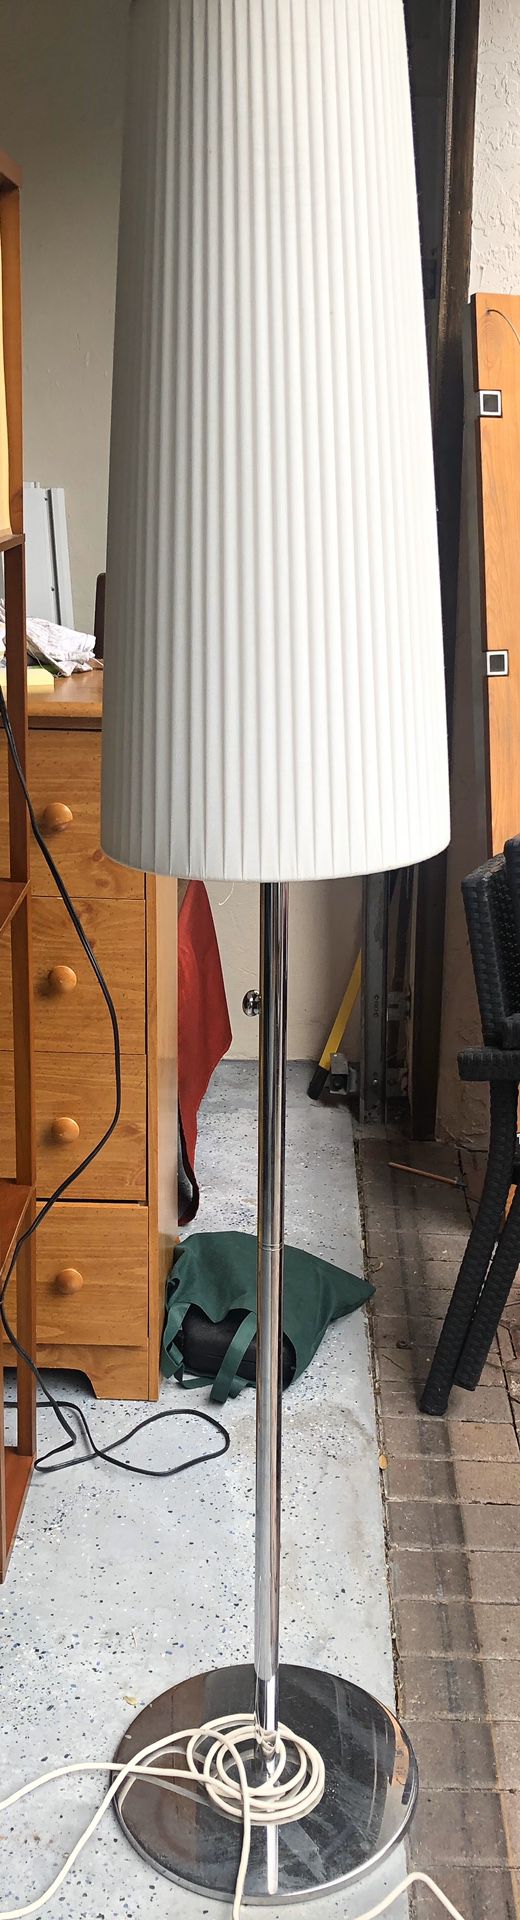 Tall elegant lamp